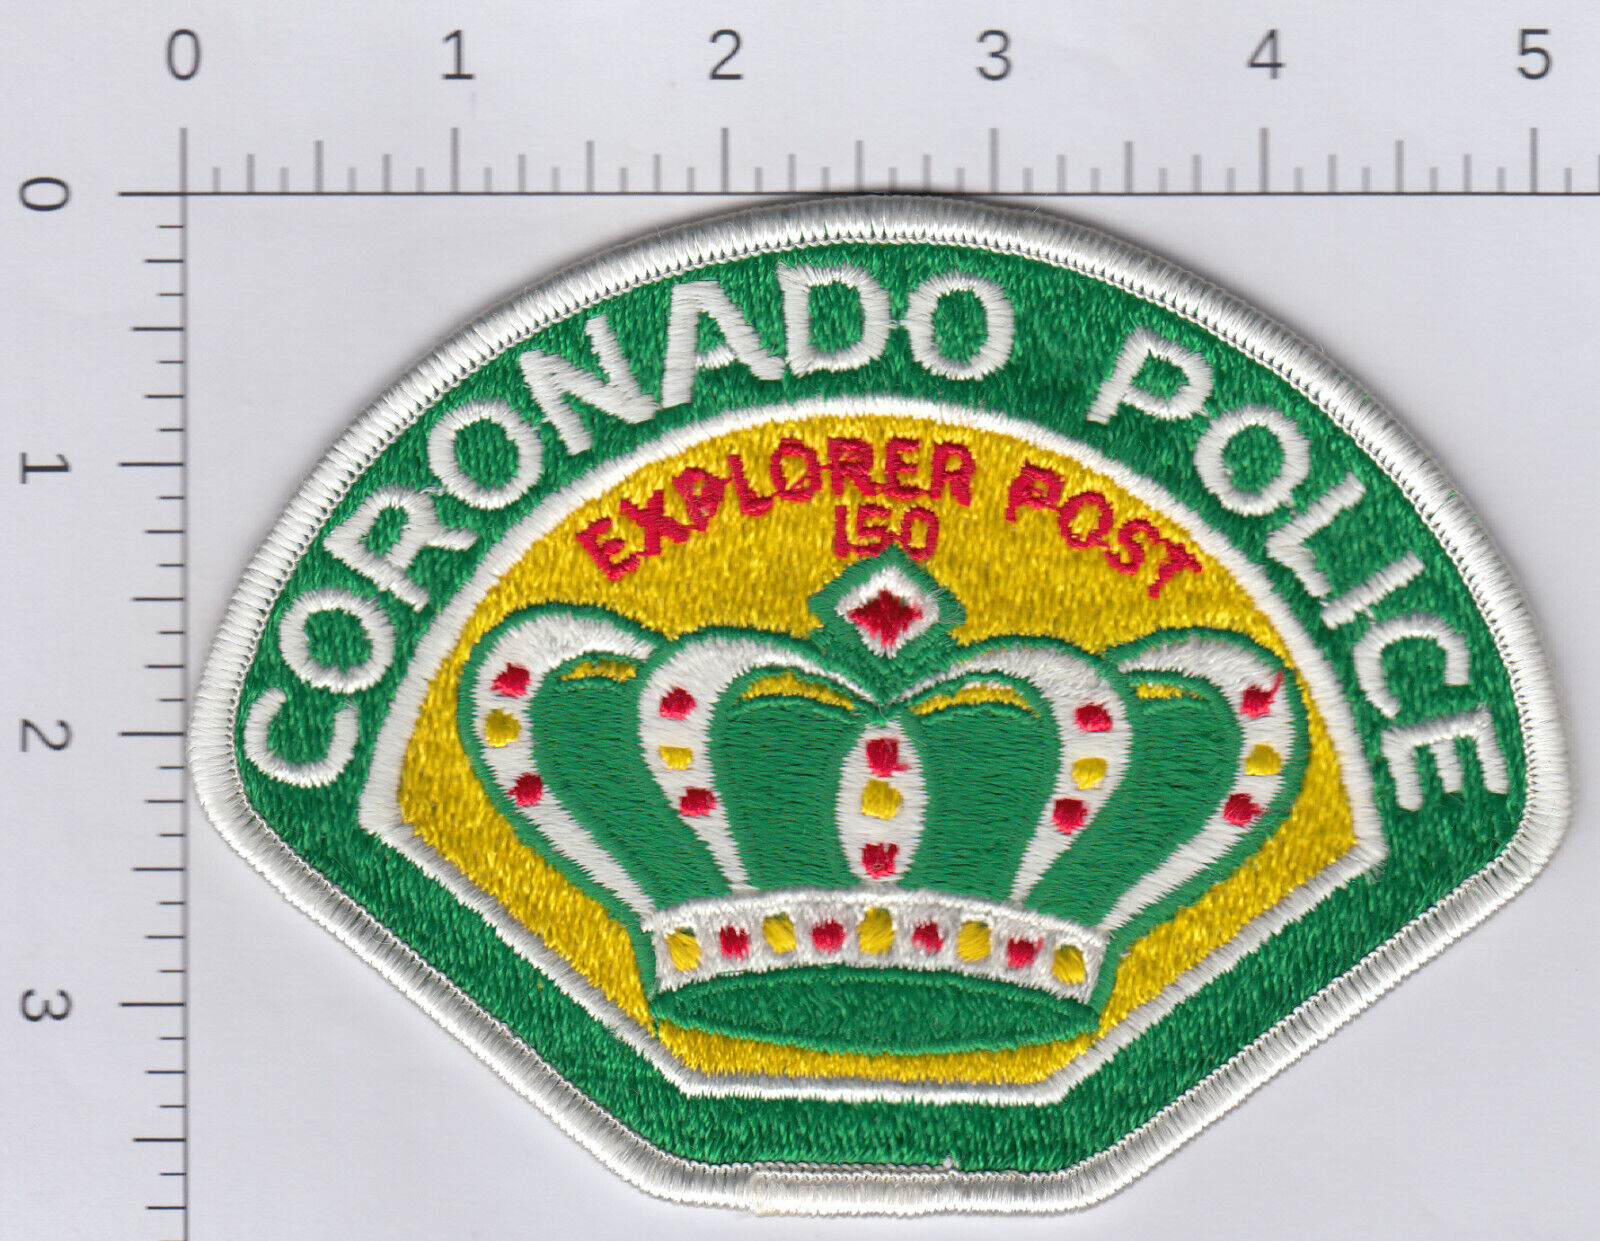 Coronado Police Explorer Post 150 patch. See scan.